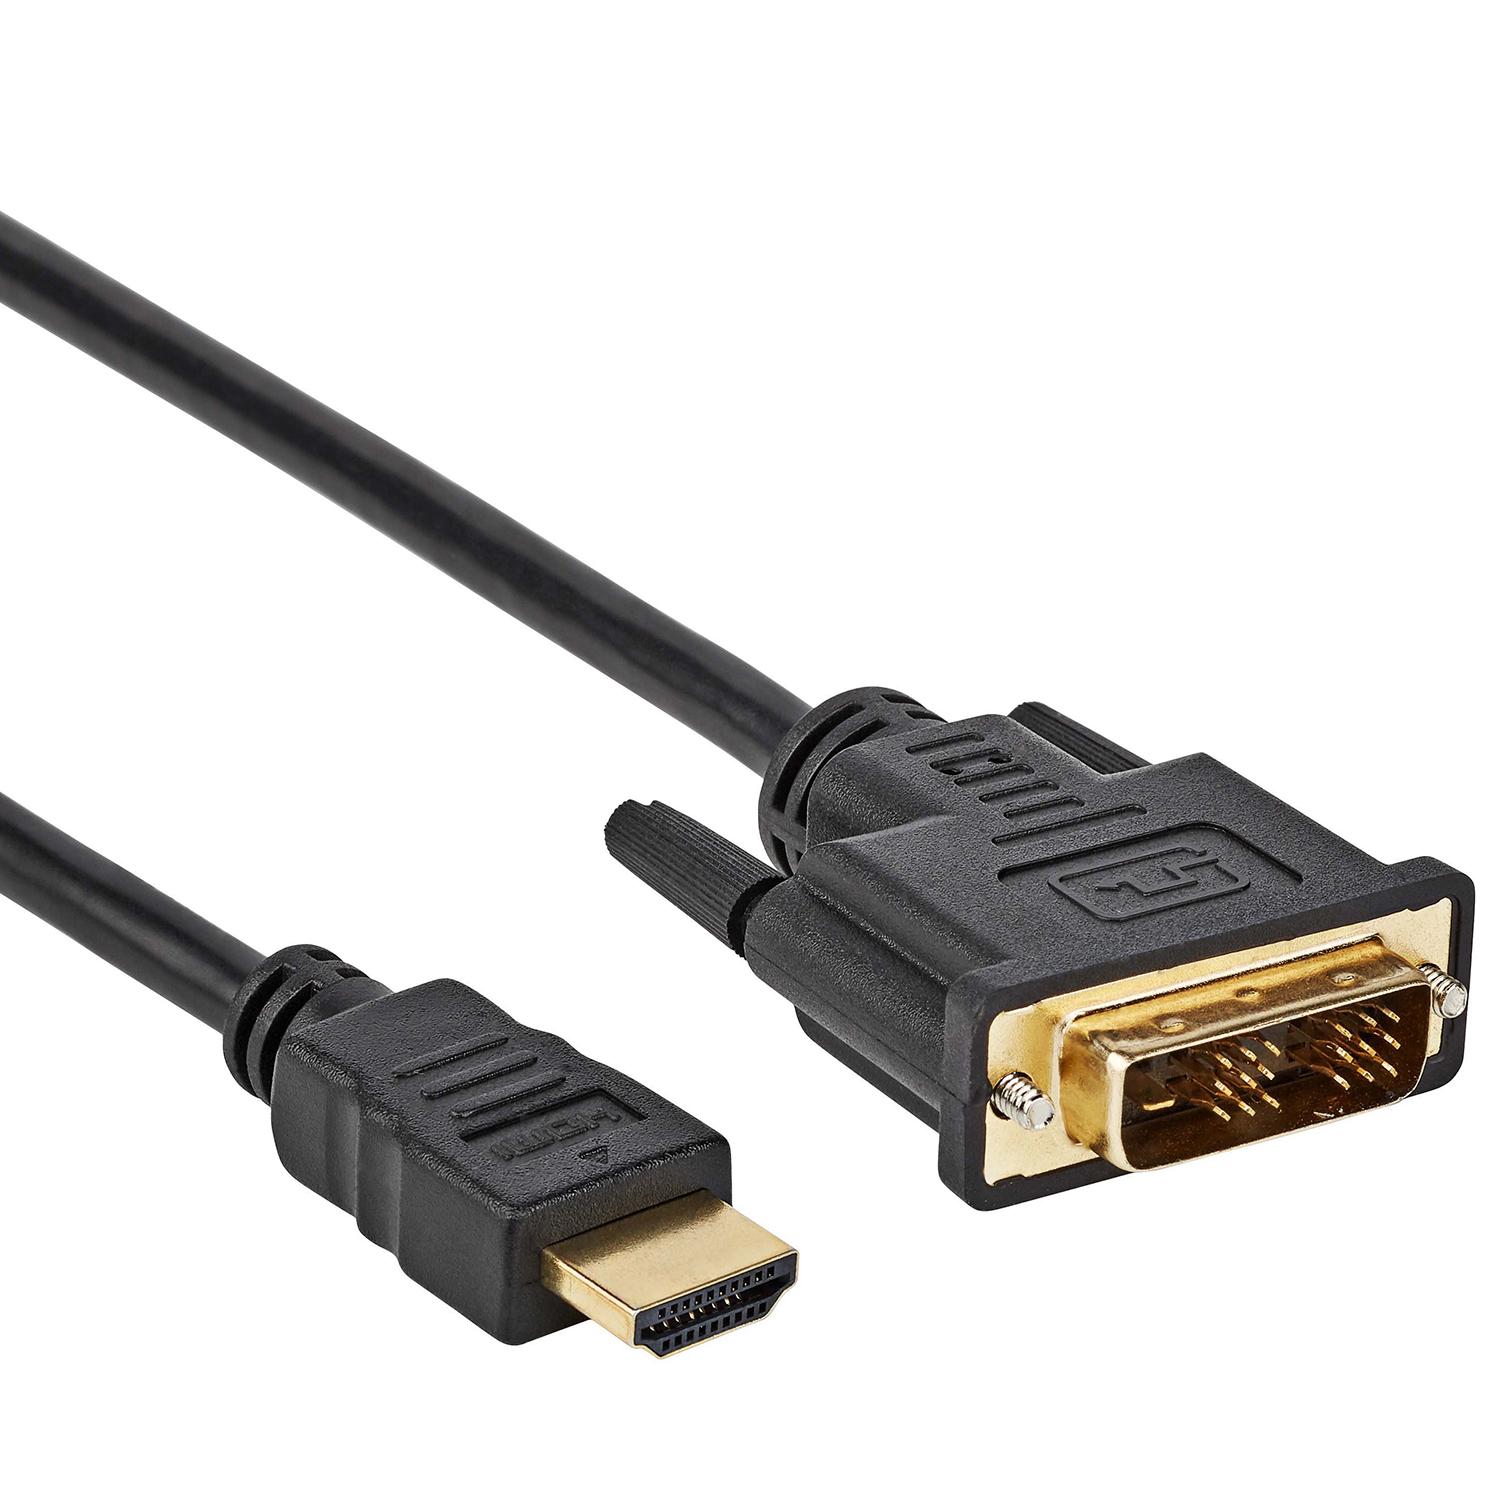 HDMI - DVI kabel - 1 meter - Allteq